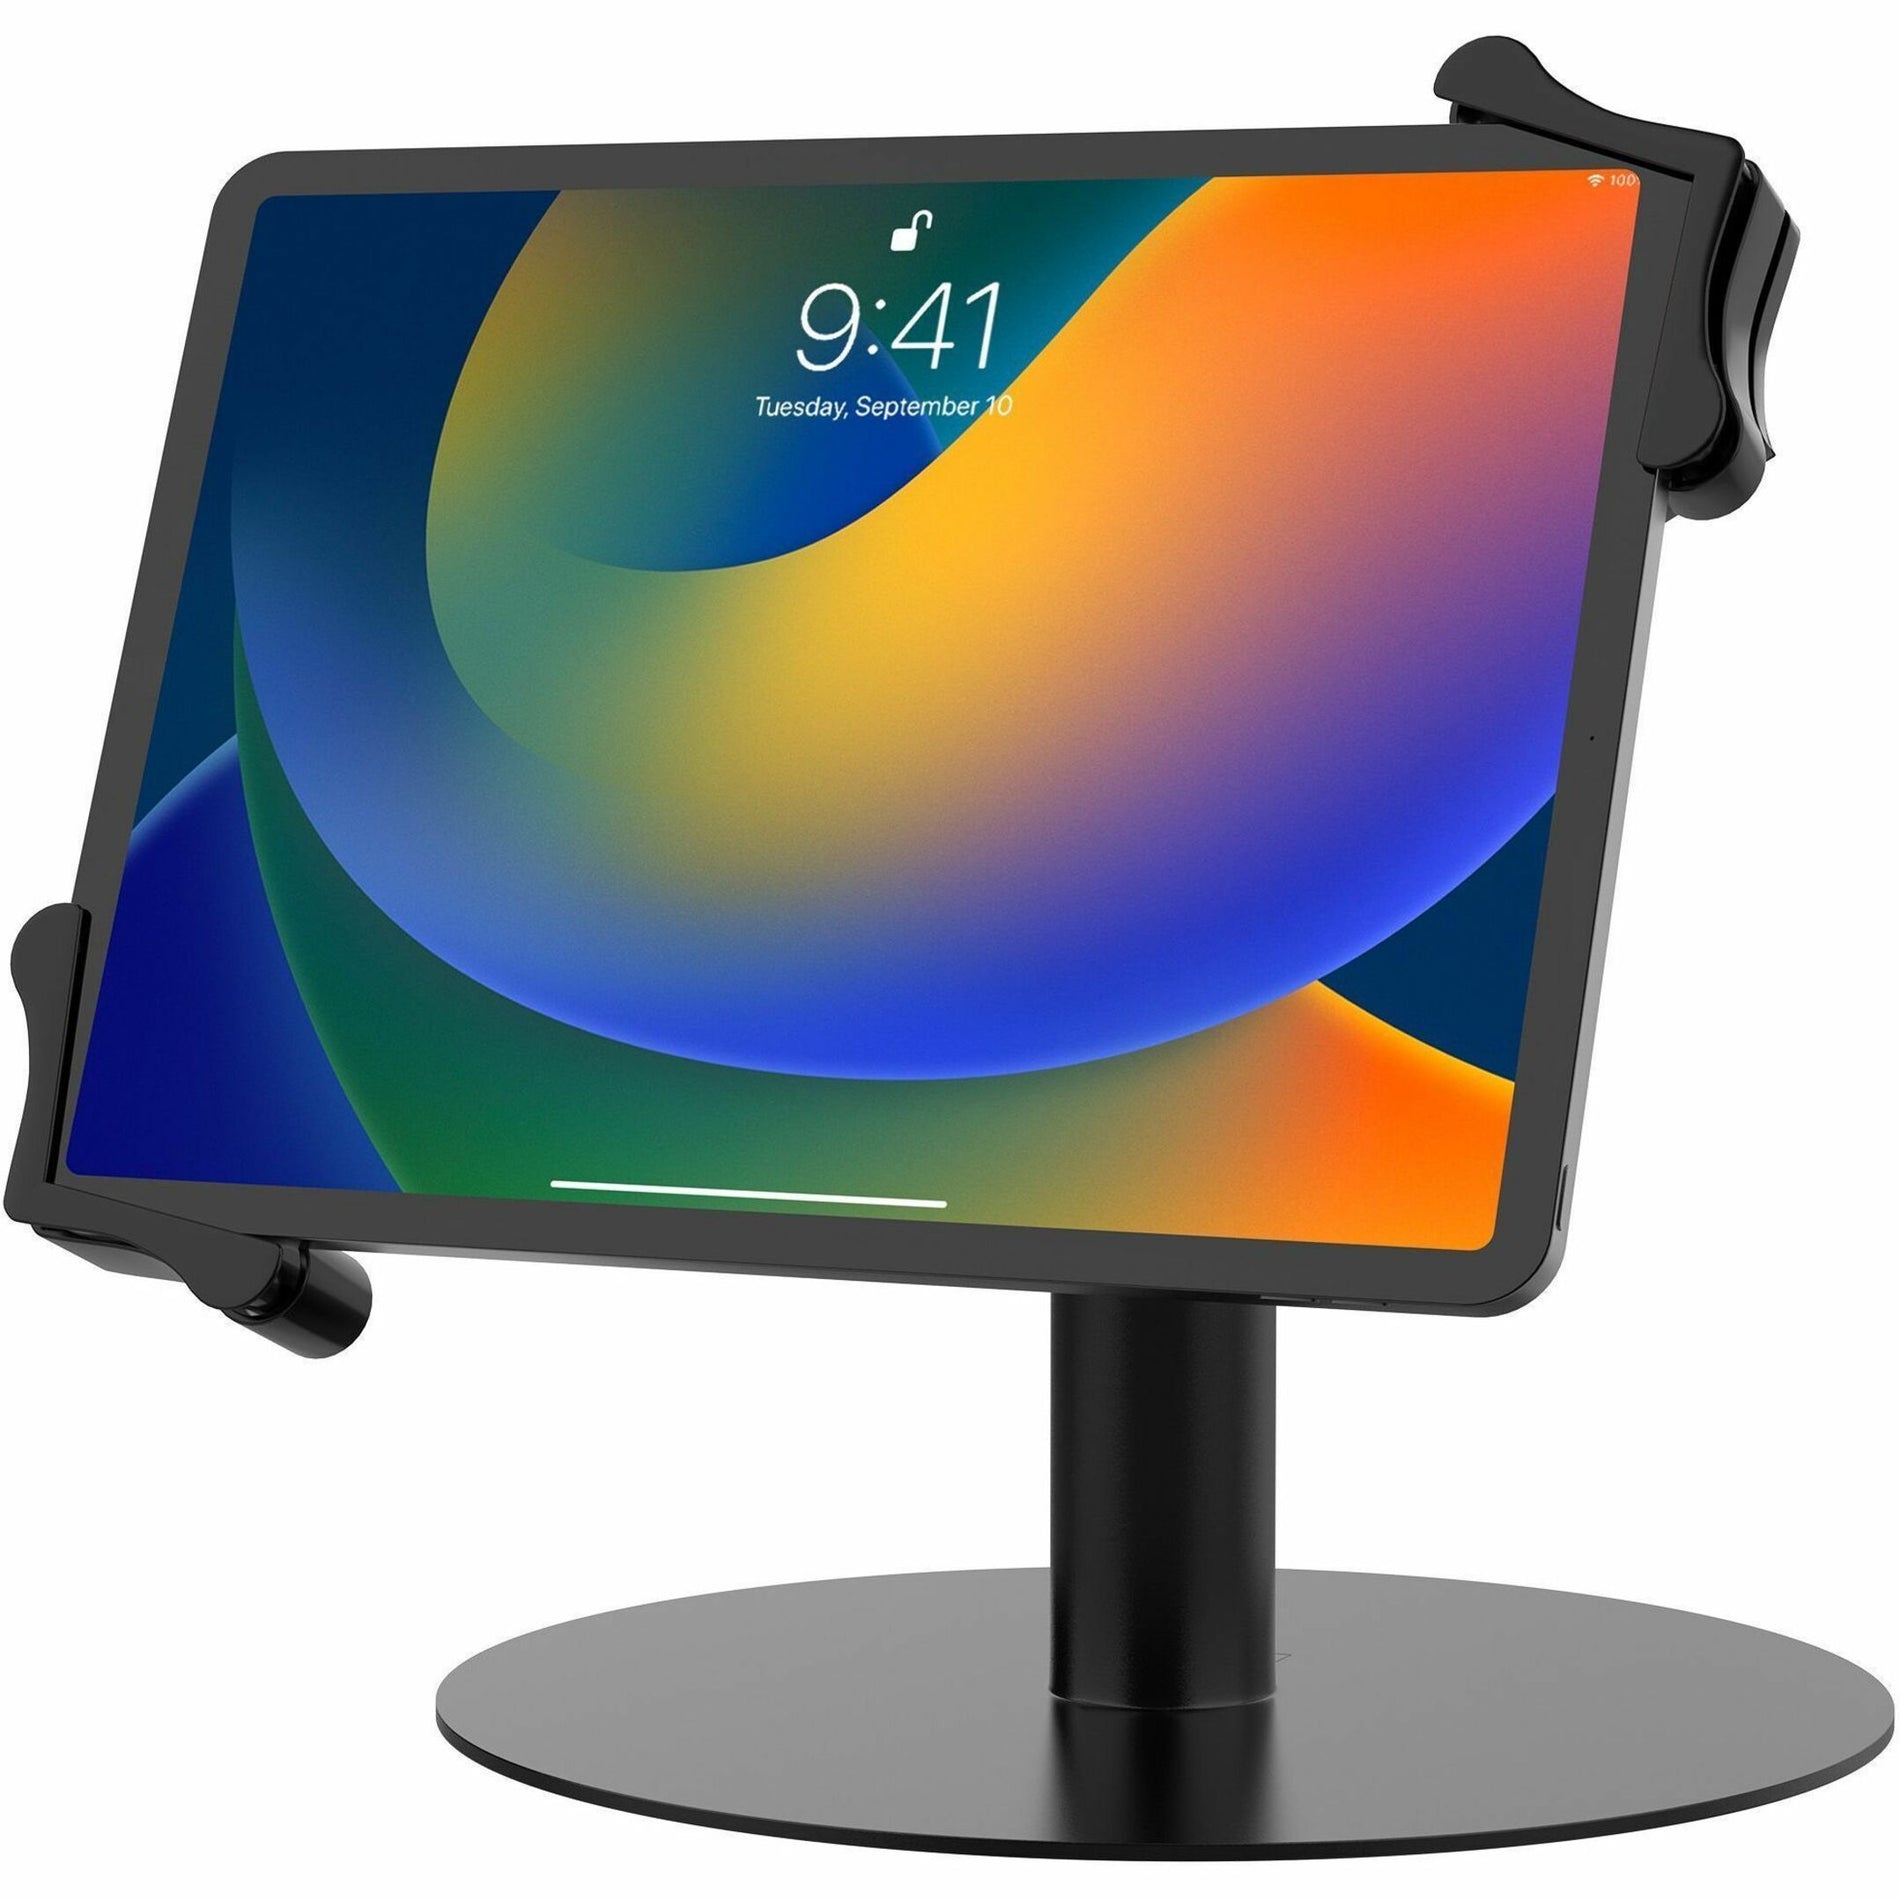 CTA Digital PAD-UGT Universal Grip Kiosk Stand for Tablets, 360° Rotation, Adjustable Angle, Cable Management